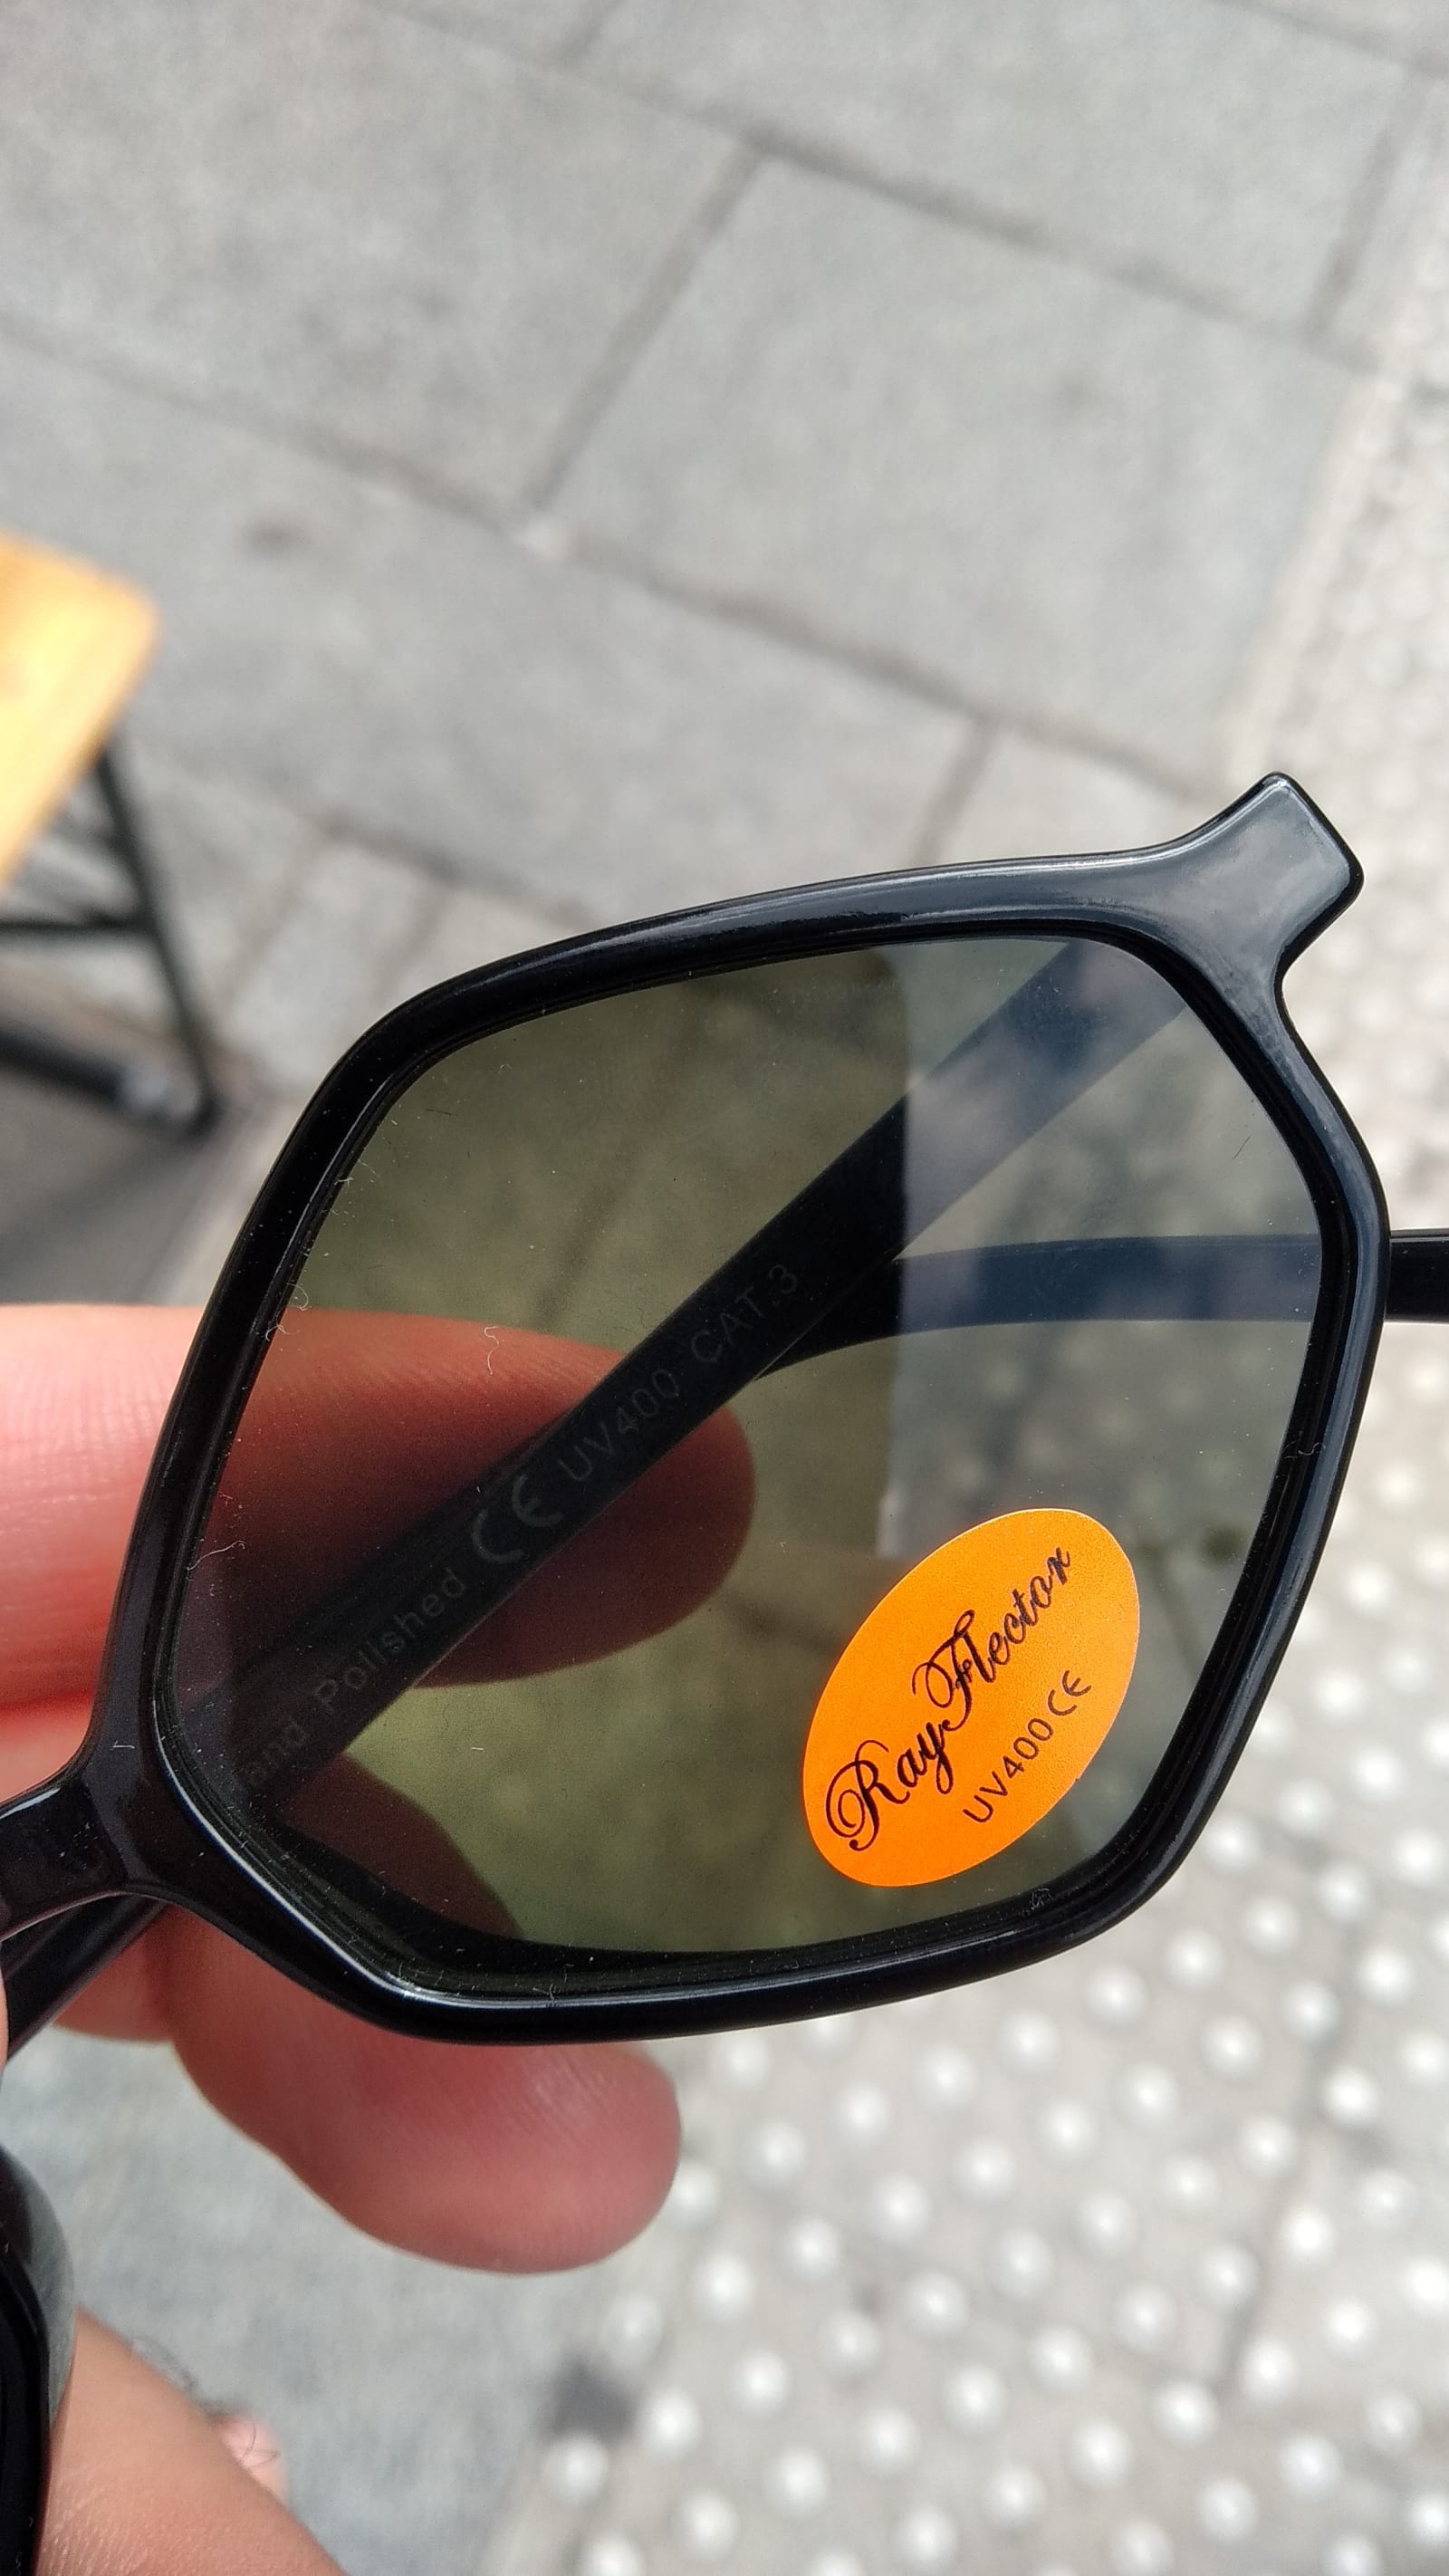 Charles - An orange sticker stuck on sun glasses says "Ray Flector"  - sun glasses, sticker - paul lahana